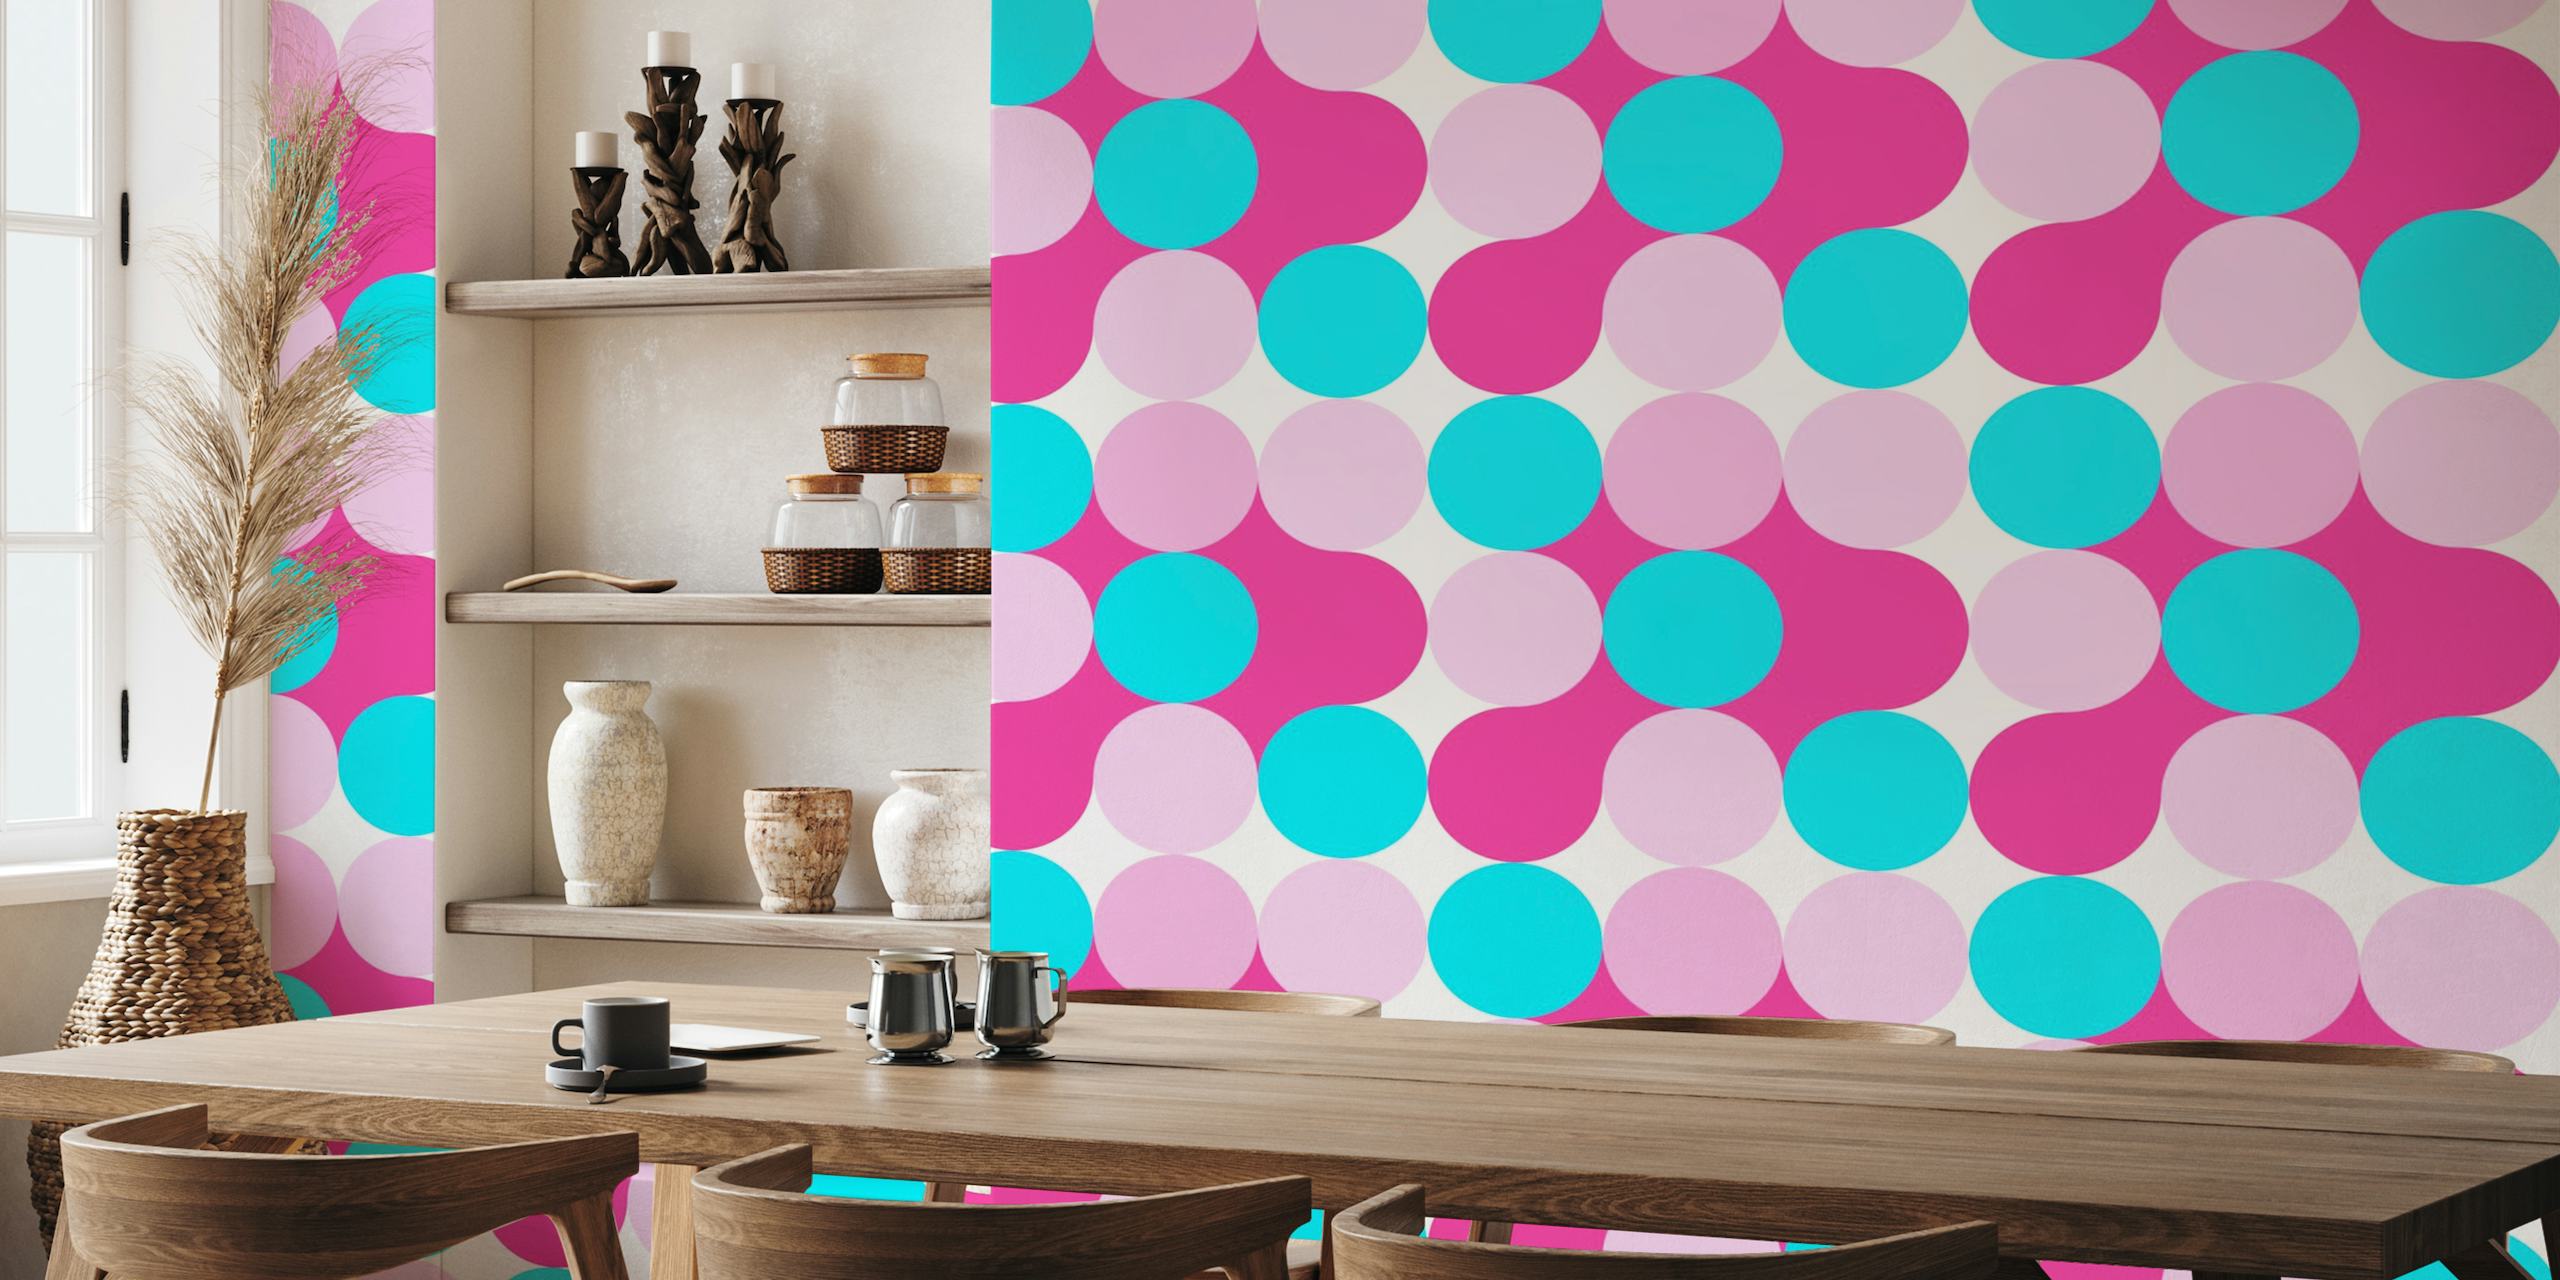 Retro Barbicore Pink and Aqua dot pattern wallpaper